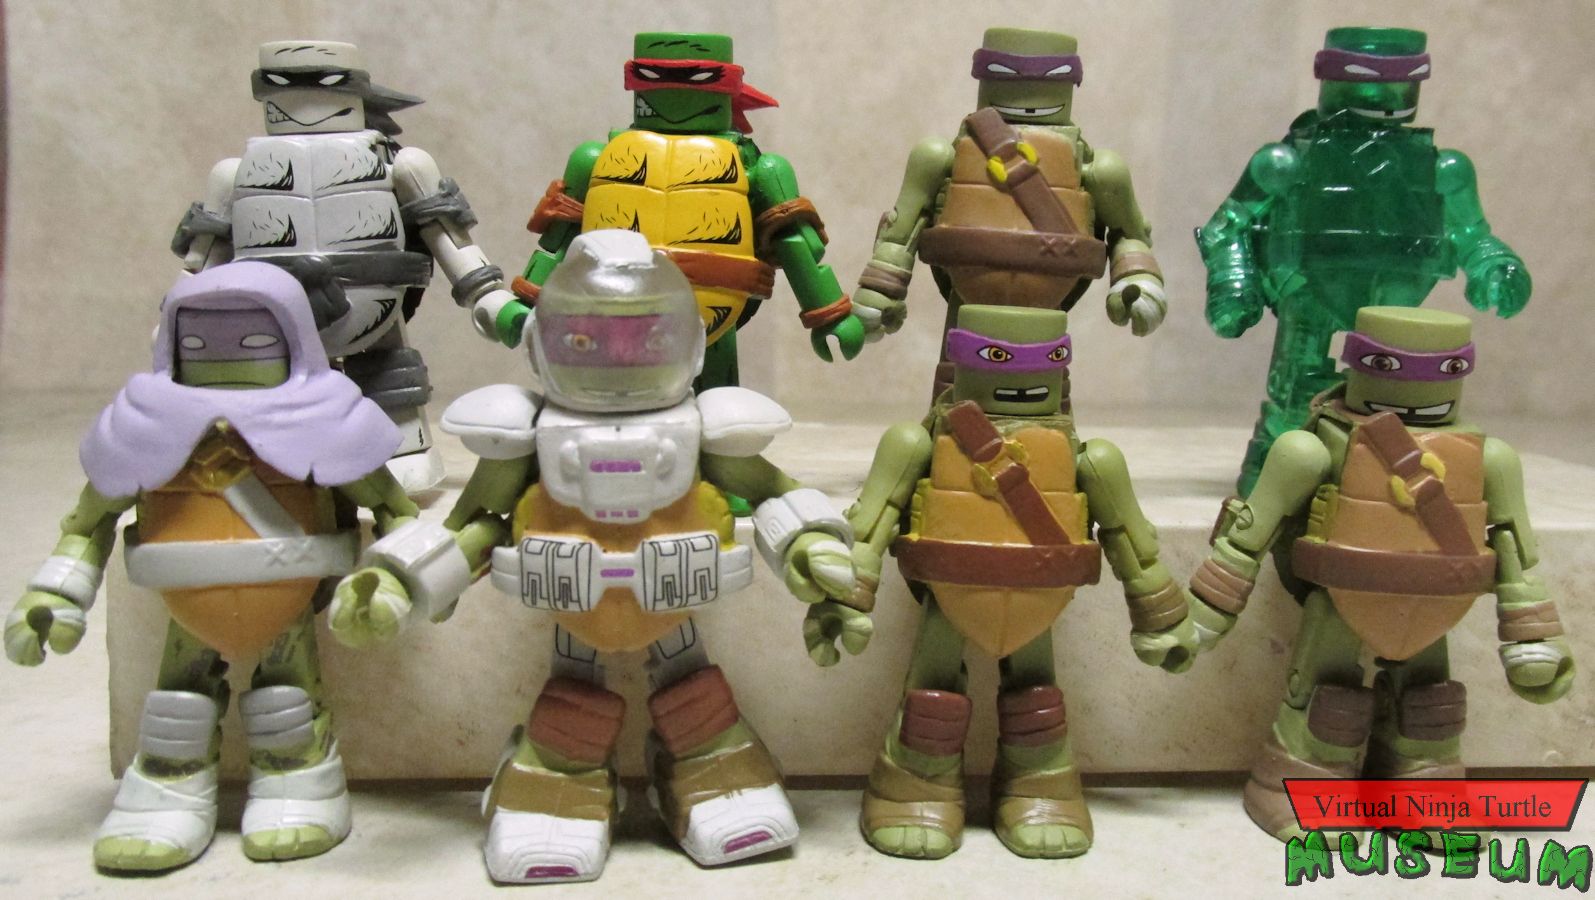 All Donatello Minimates